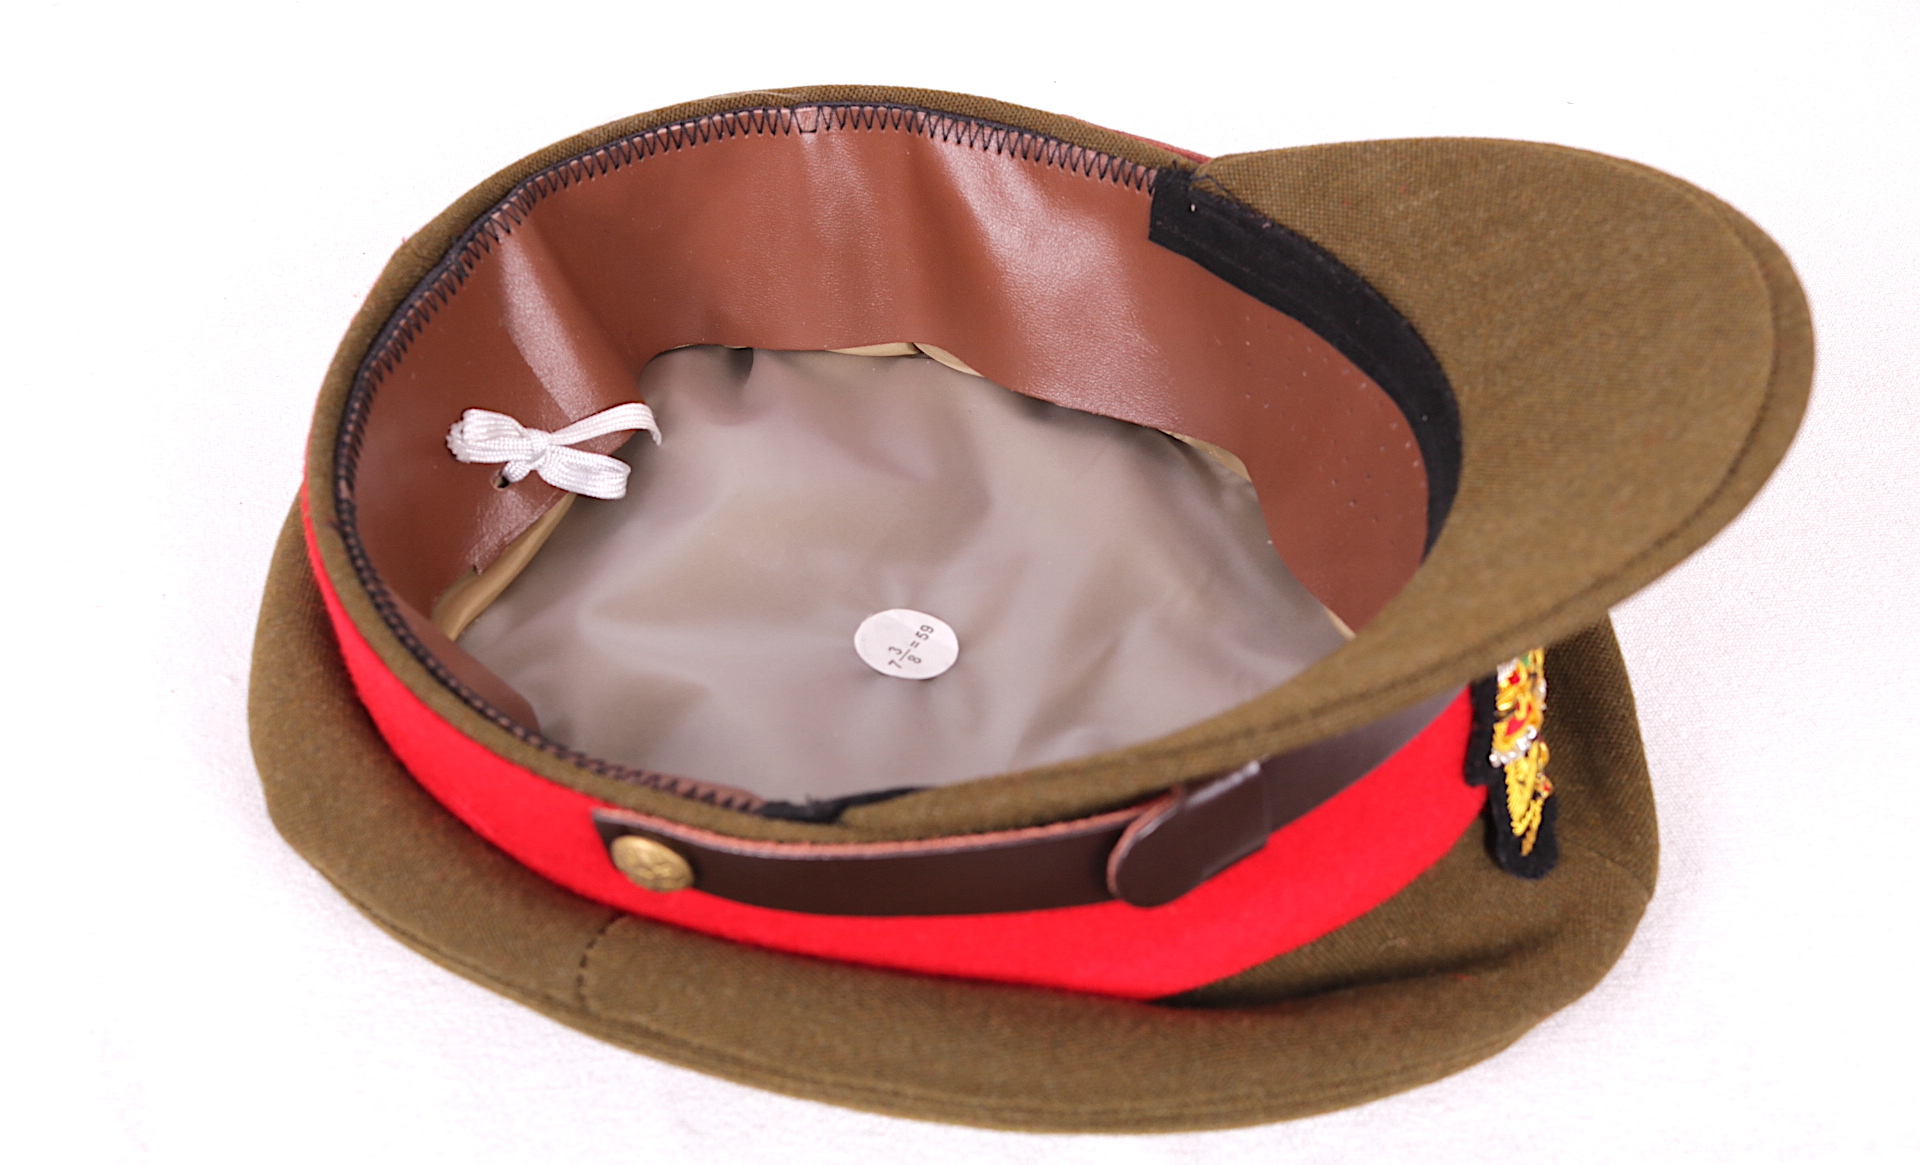 WW2 BRITISH ARMY OFFICERS VISOR HAT GOLD BRAID CAP MILITARY 59cm LGE 